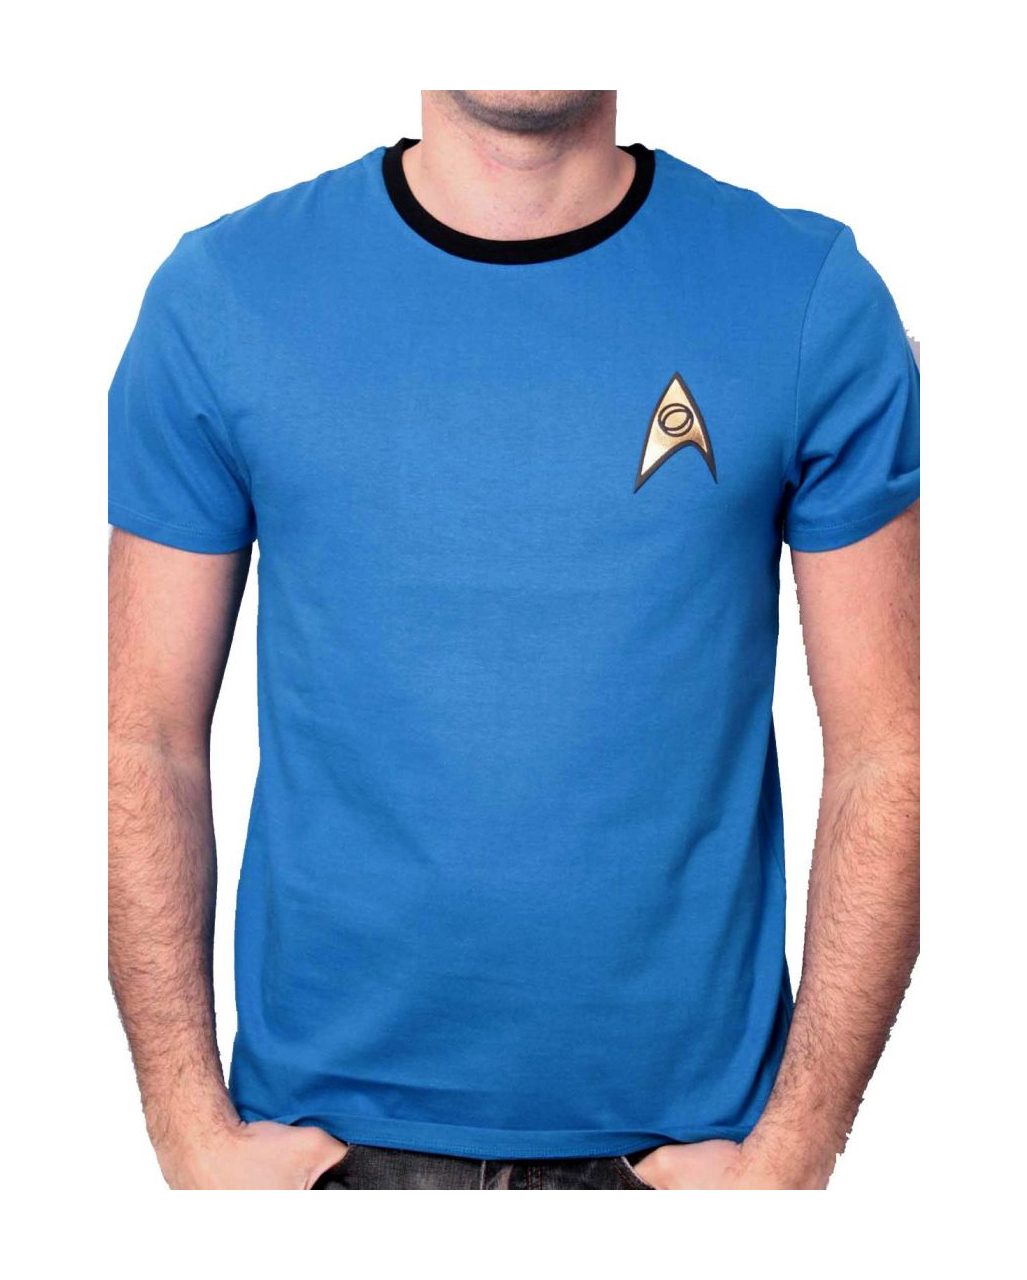 star trek symbol on shirt